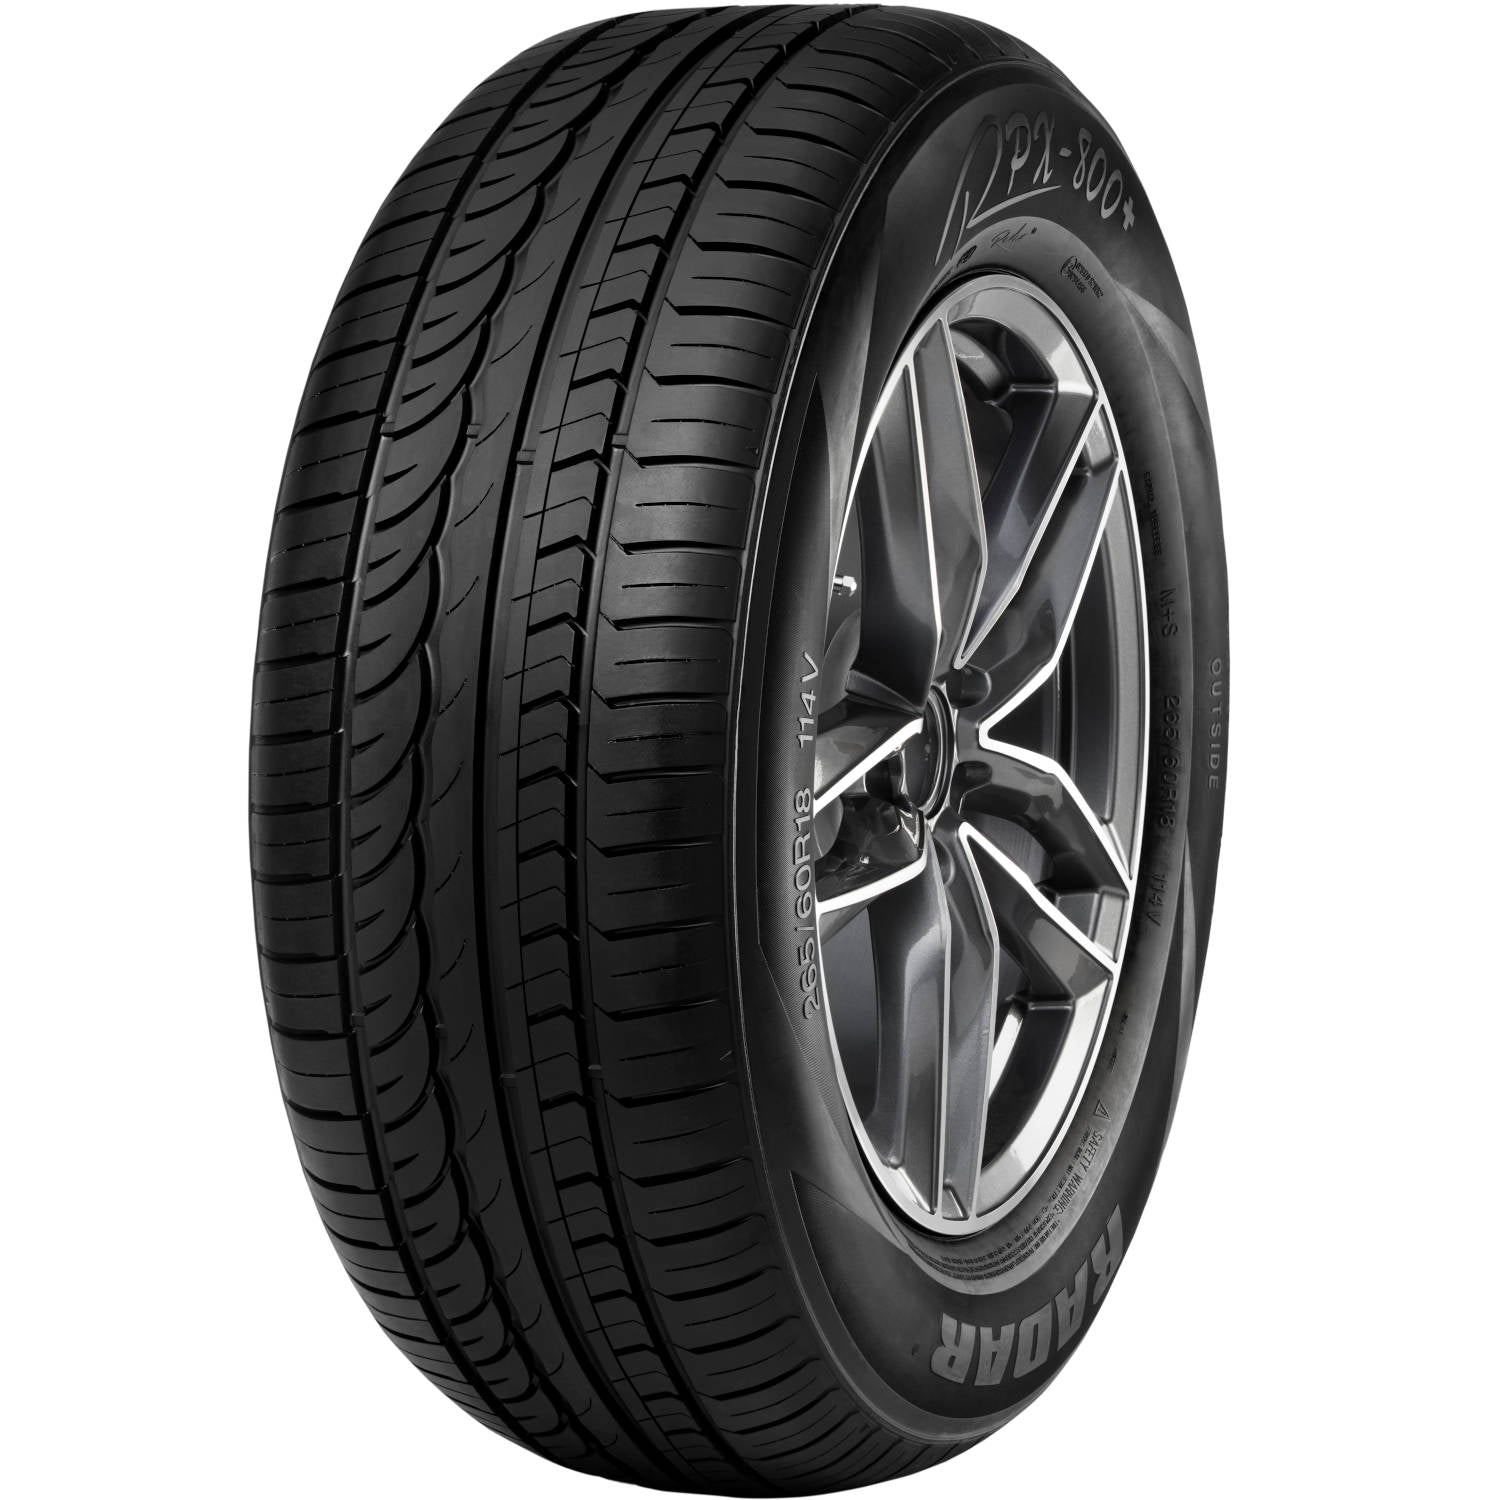 RADAR RPX-800 PLUS 245/65R17 (29.5X9.7R 17) Tires